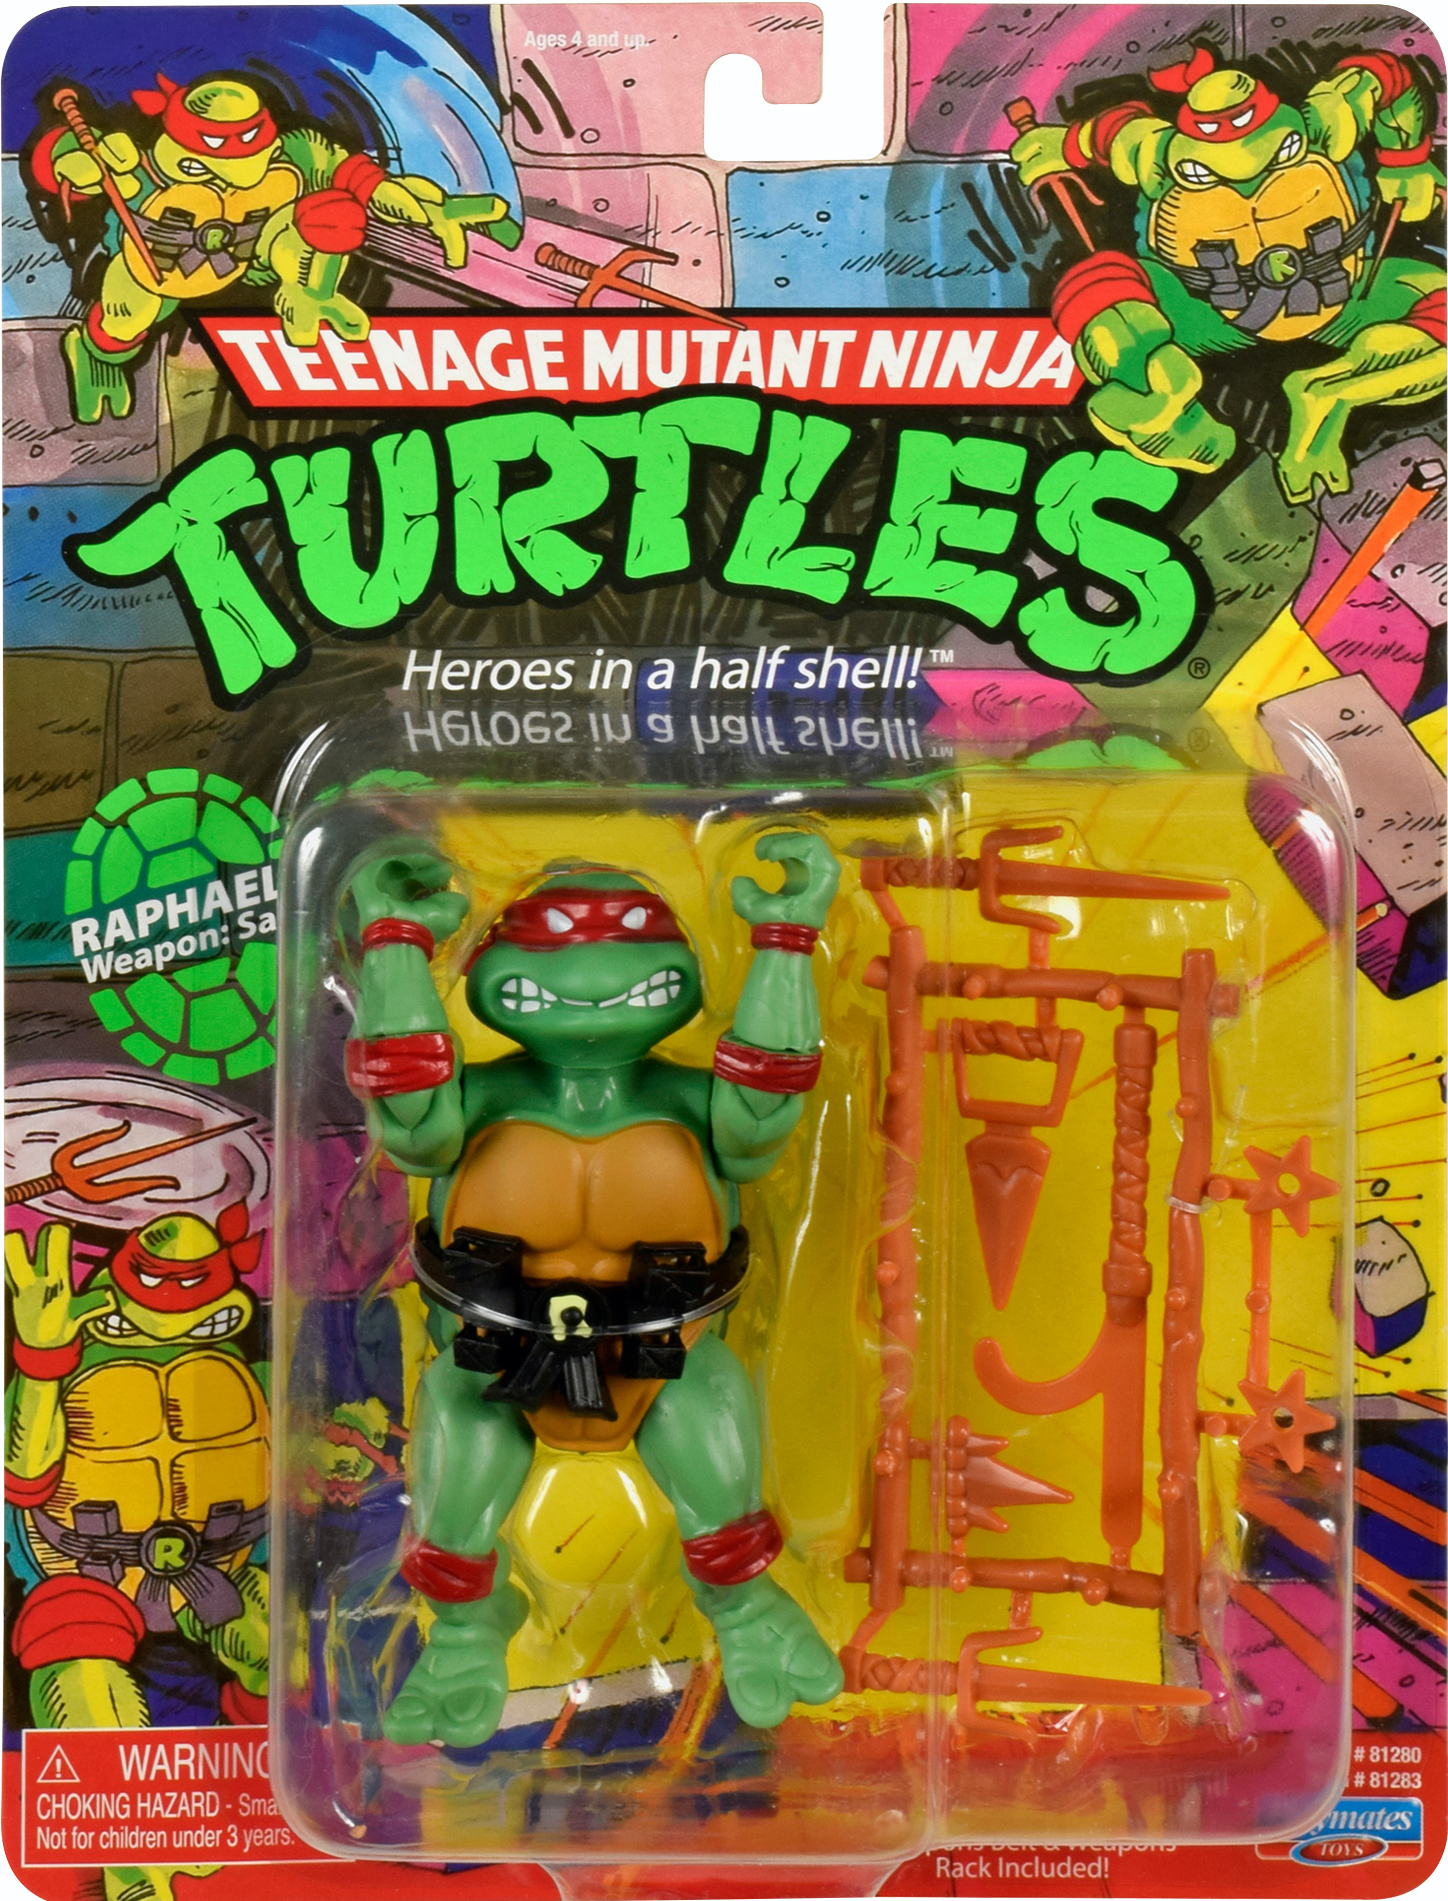 https://www.actionfigure411.com/teenage-mutant-ninja-turtles/images/raphael-classic-basic-2891.jpg